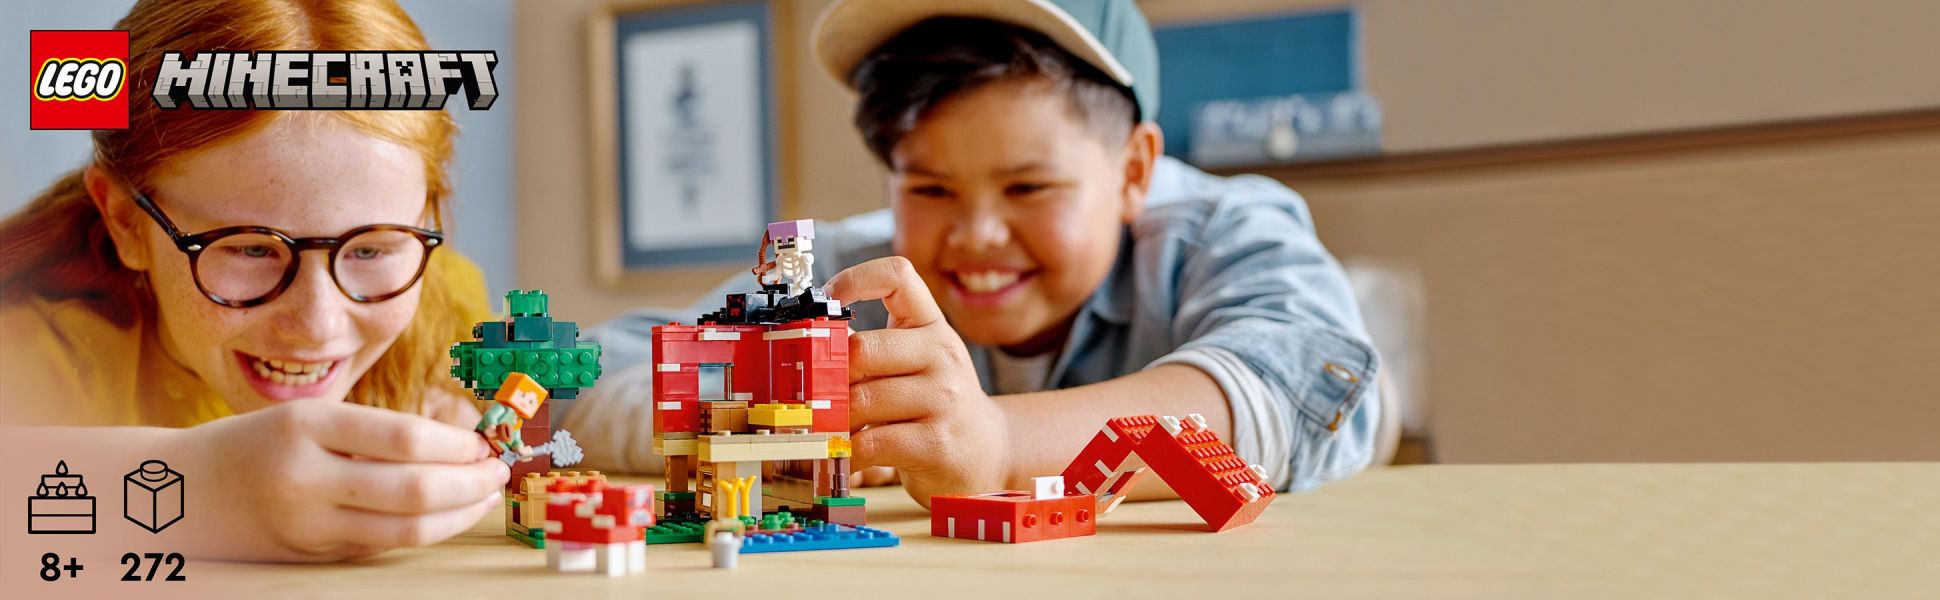 Gift 21179 House Mushroom Figures Set Minecraft for Idea Animal Mooshroom Jockey Spider Building Toy Kids & plus, LEGO Alex, The 8 Age with